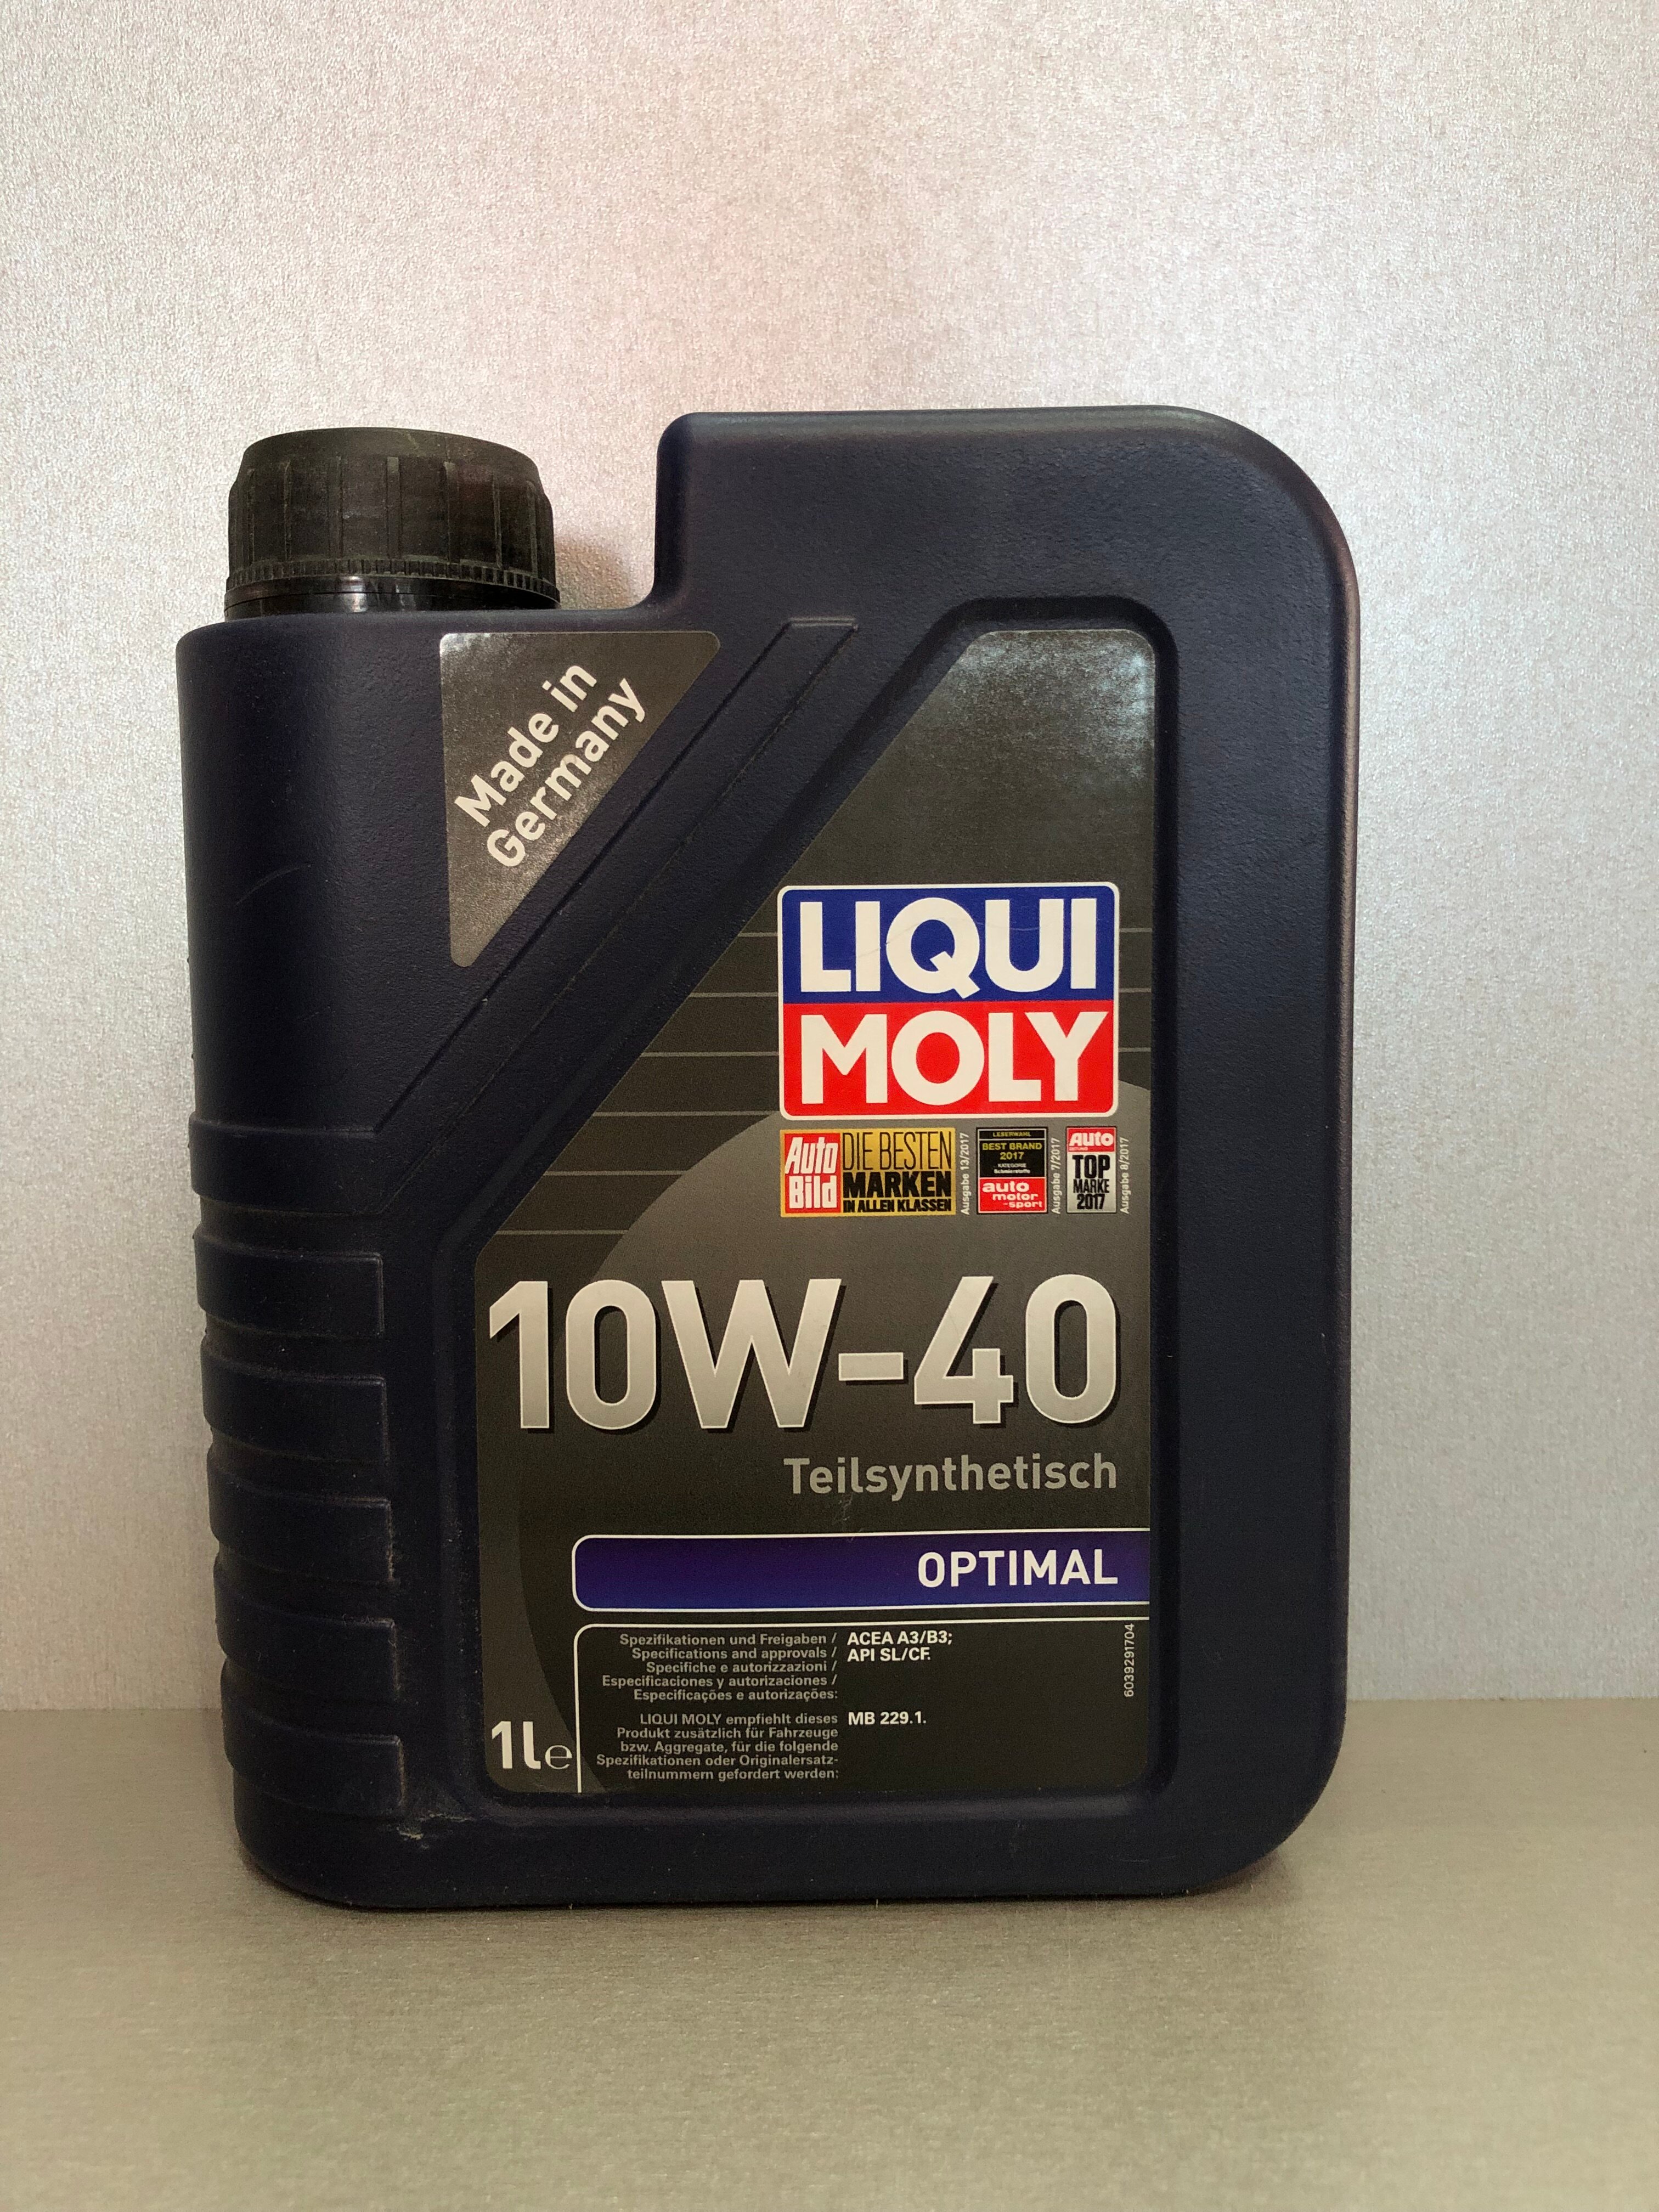   Liqui Moly Optimal 10W-40 1 /. API SL/CF